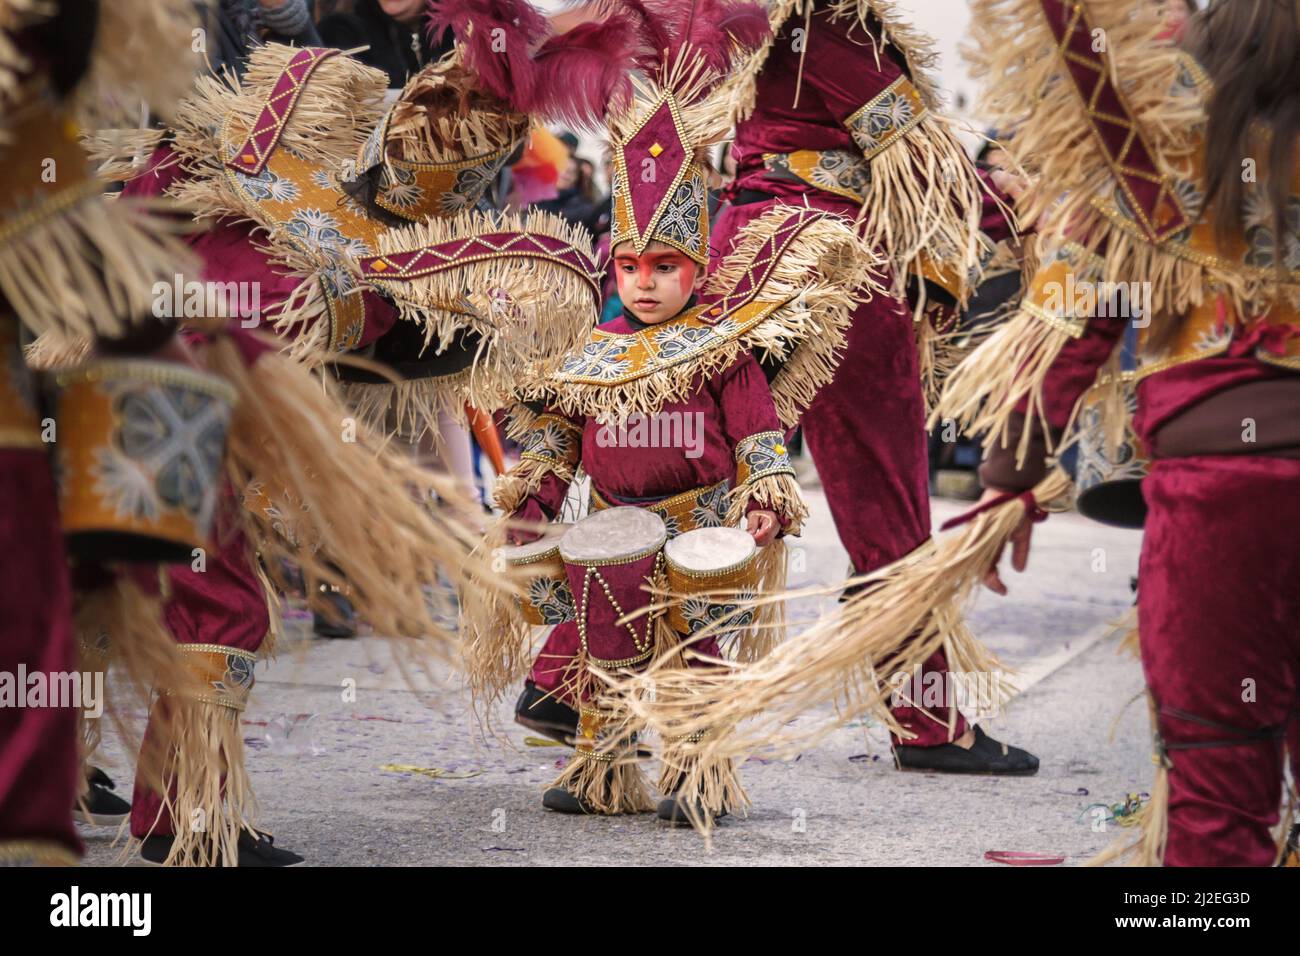 Carnevale Portoghese - giovane ragazzo con tamburi africani - Bate no Tambor - Samba Pra Sauda Africa - Samba School Batuca - Mealhada Carnaval parade Foto Stock